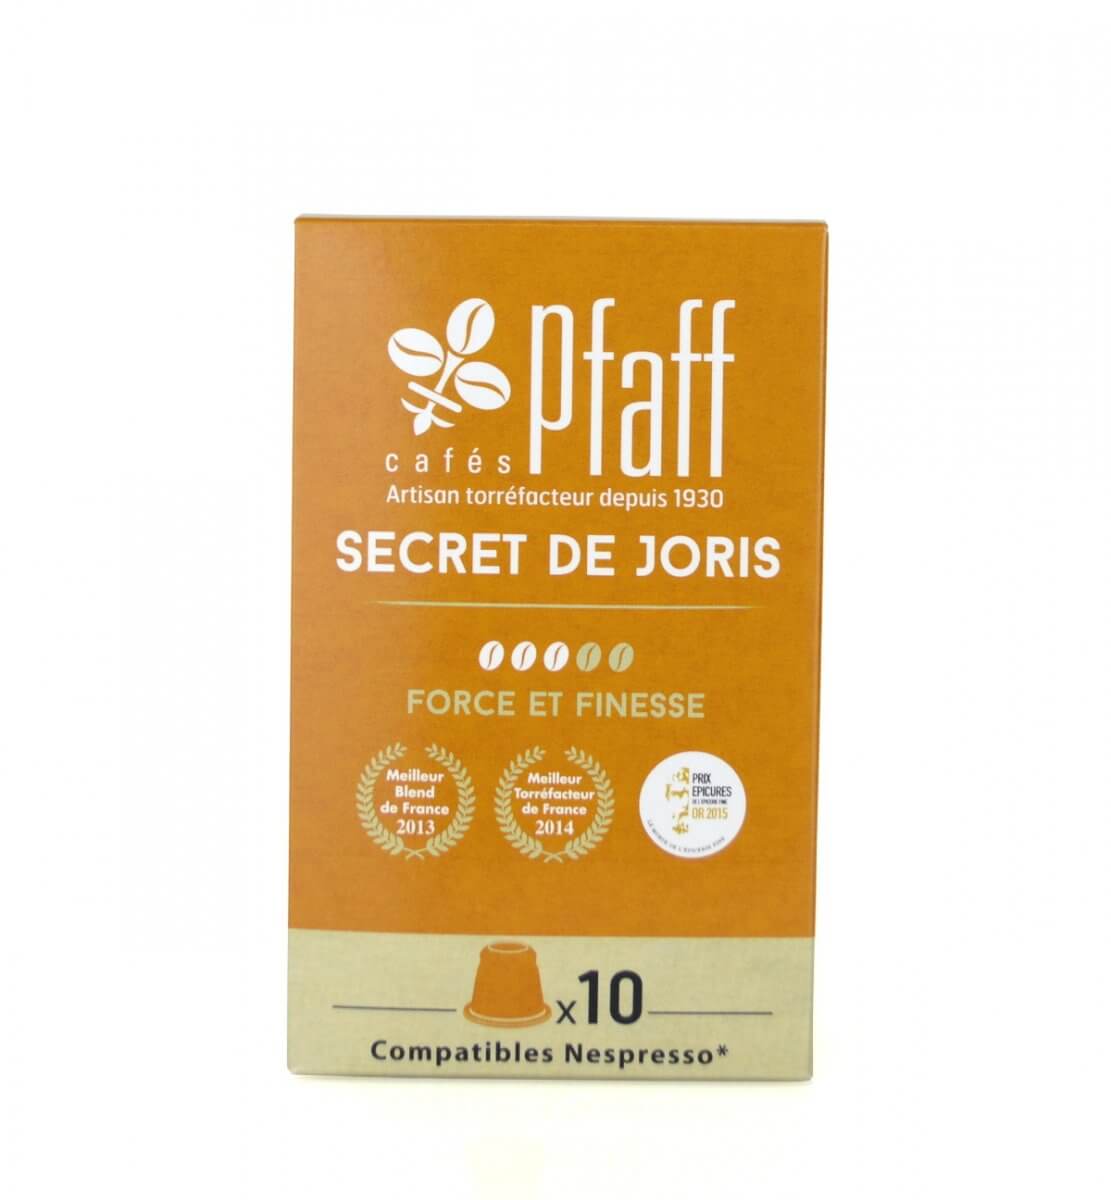 secret joris capsules compatibles nespresso cafes pfaff